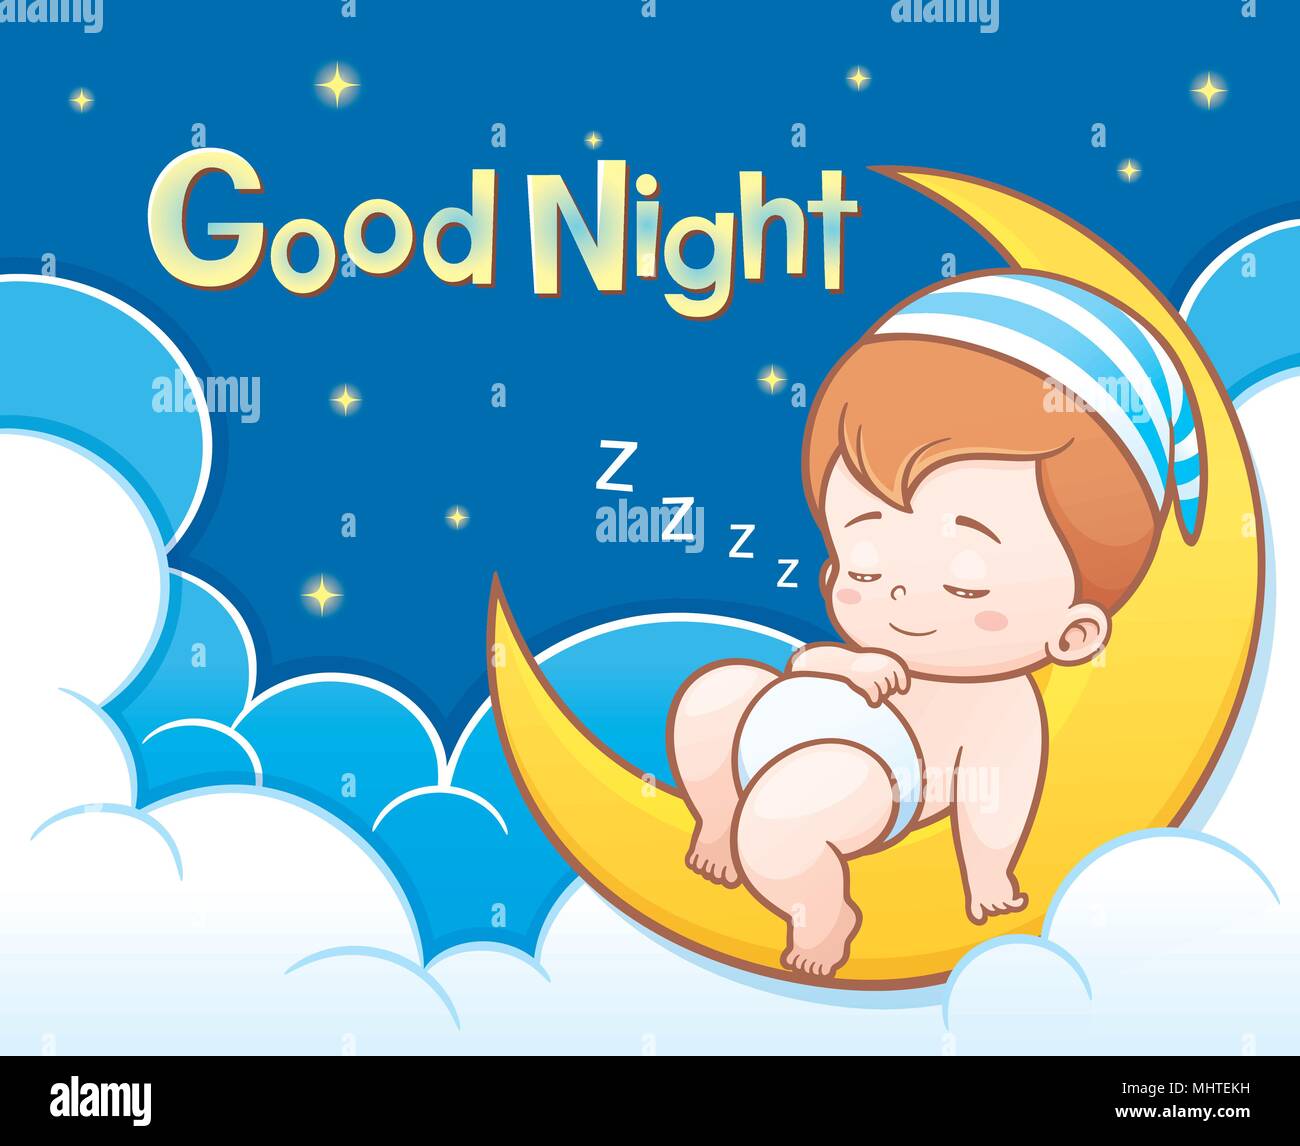 Vector Illustration of Cartoon Cute Baby Sleeping on the moon with ...